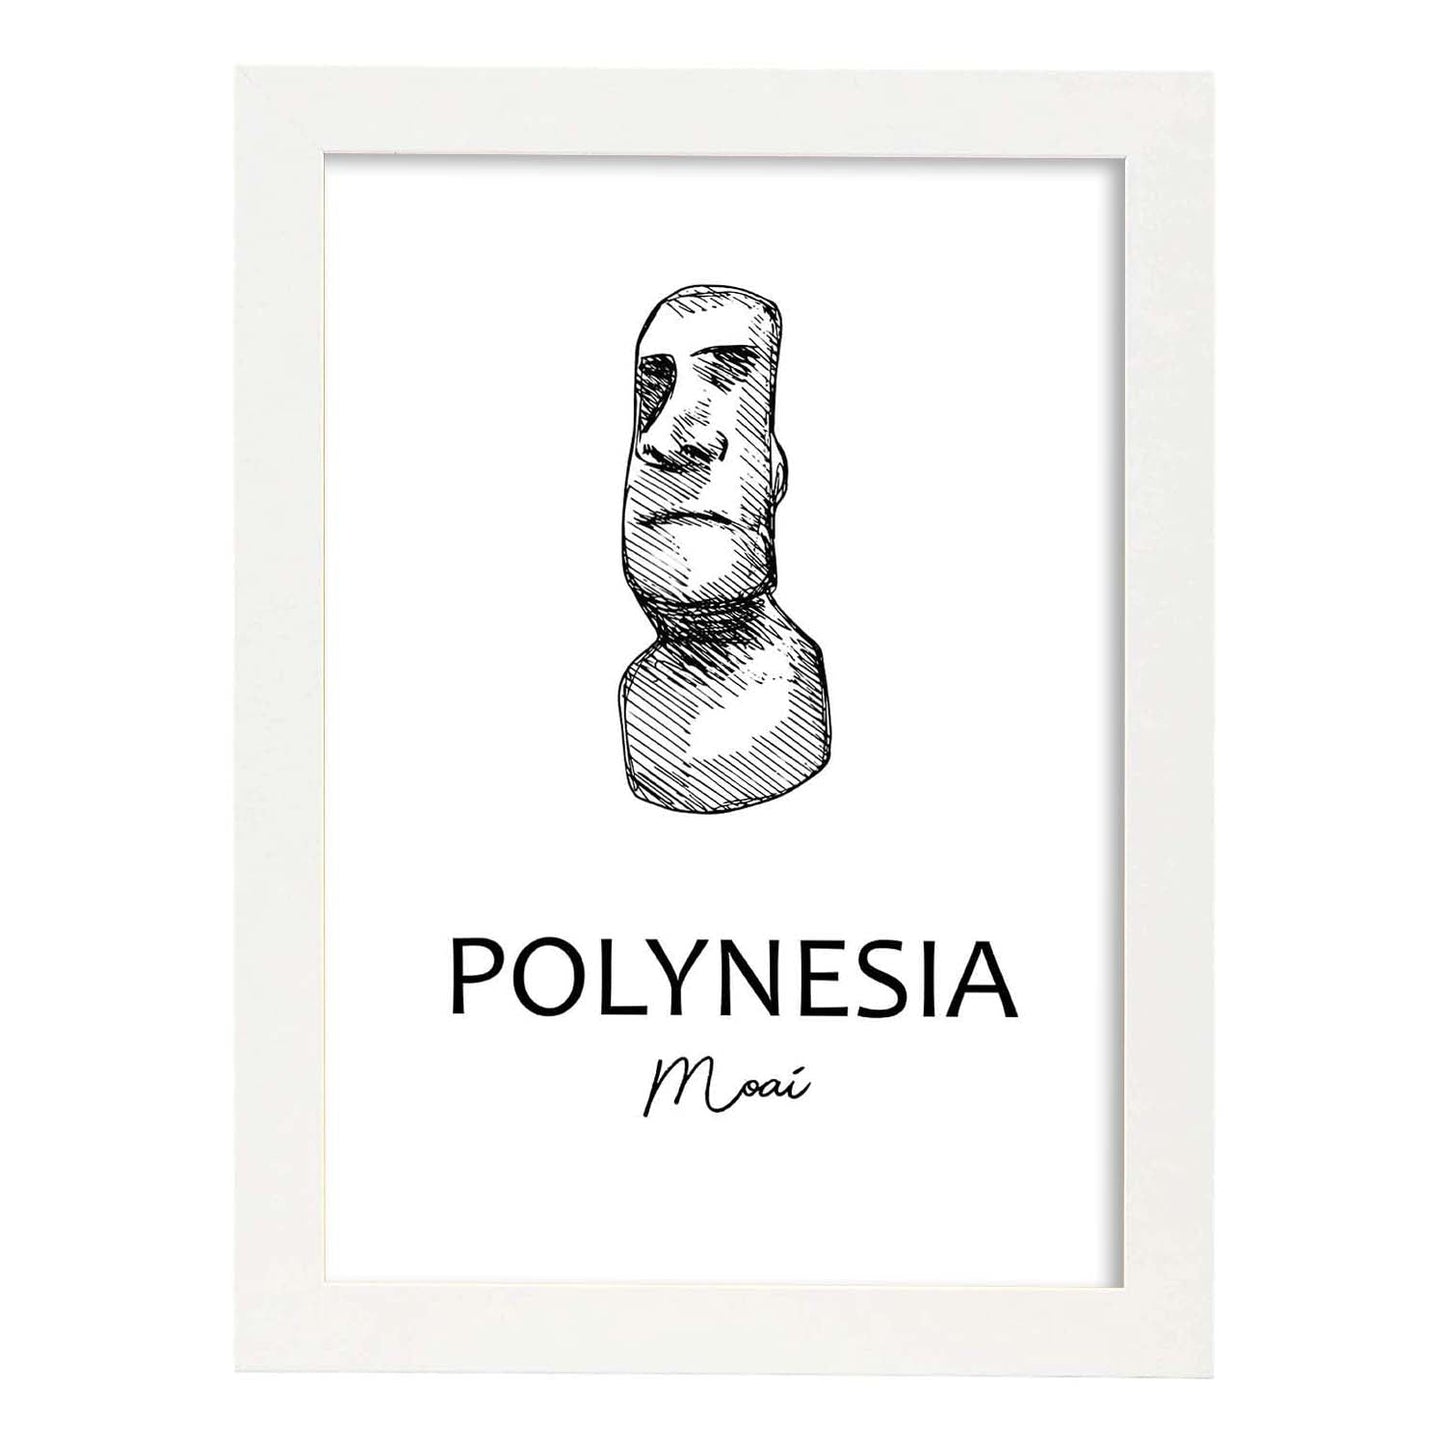 Poster de Polinesia - Moai. Láminas con monumentos de ciudades.-Artwork-Nacnic-A4-Marco Blanco-Nacnic Estudio SL